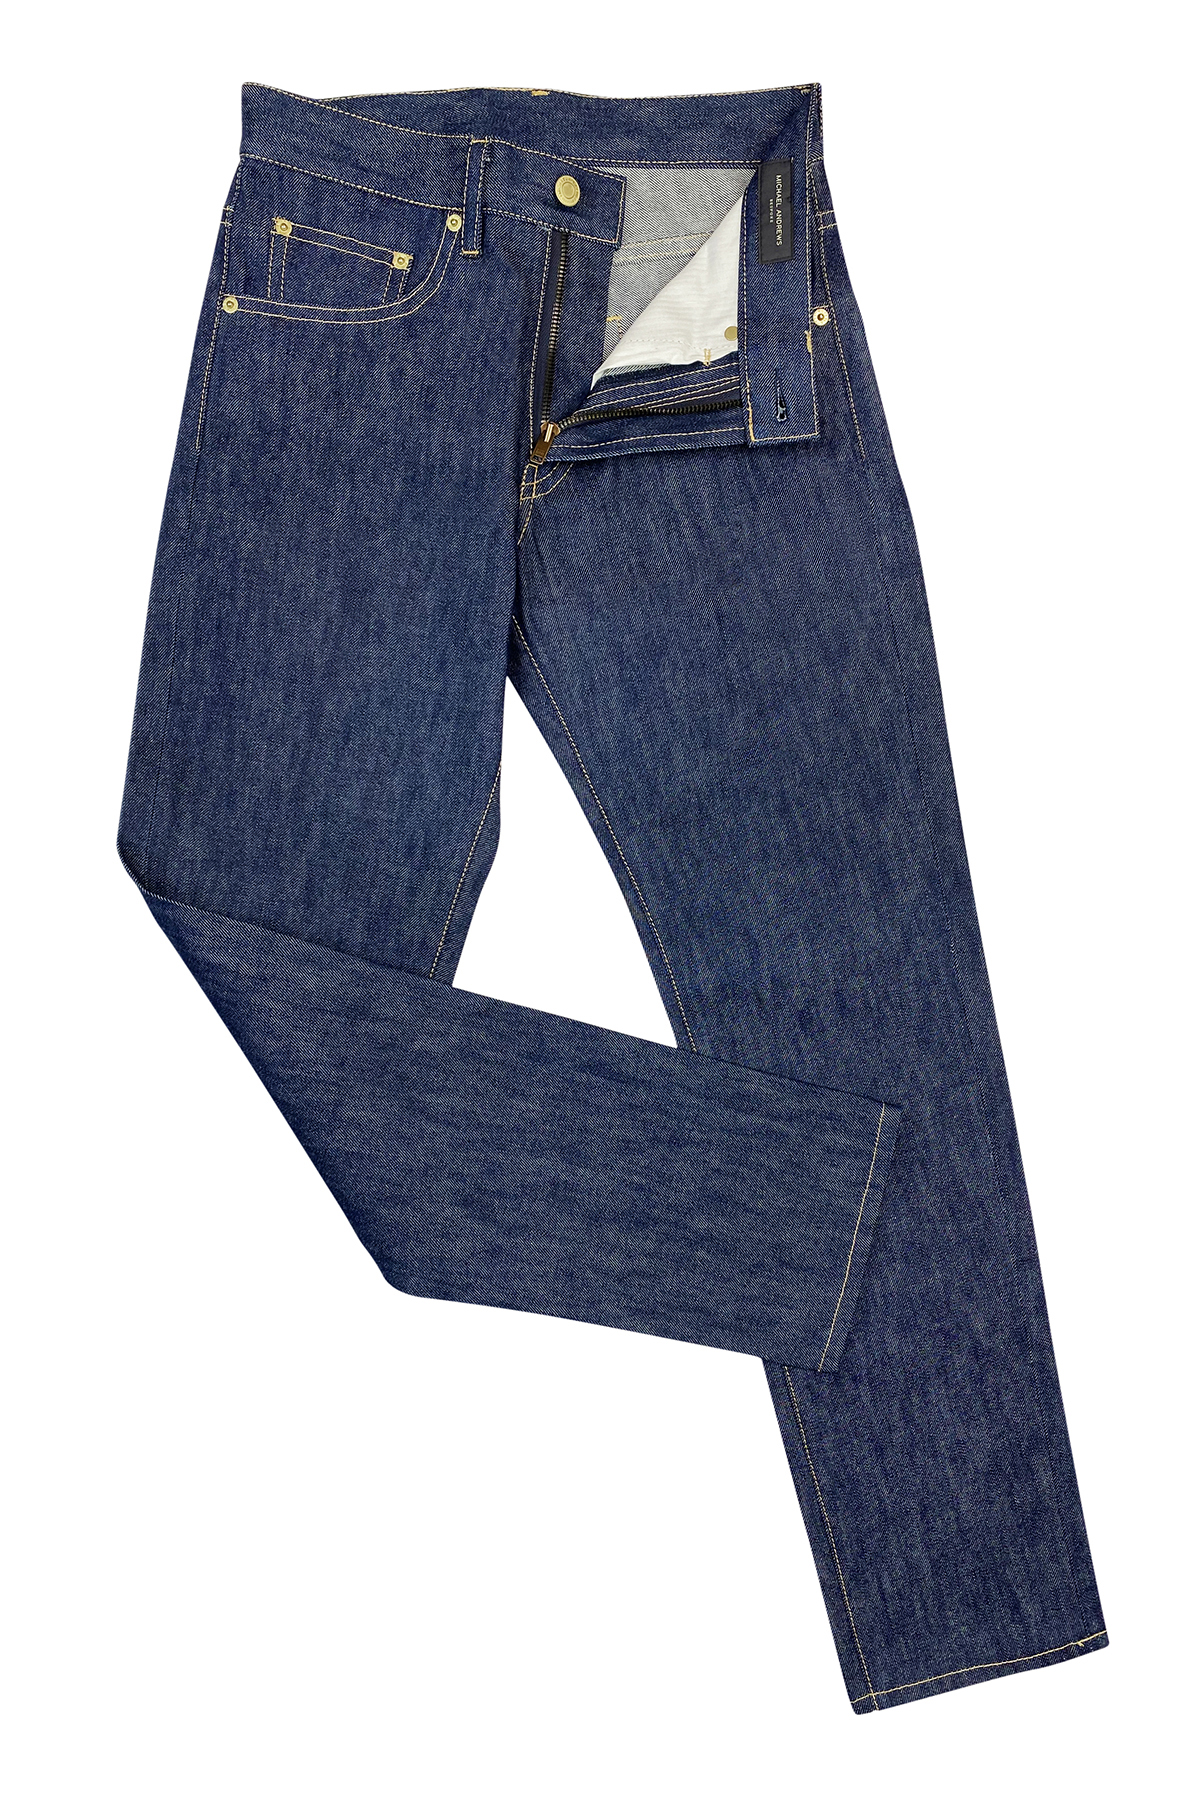 Navy Blue Stretch Denim Jeans